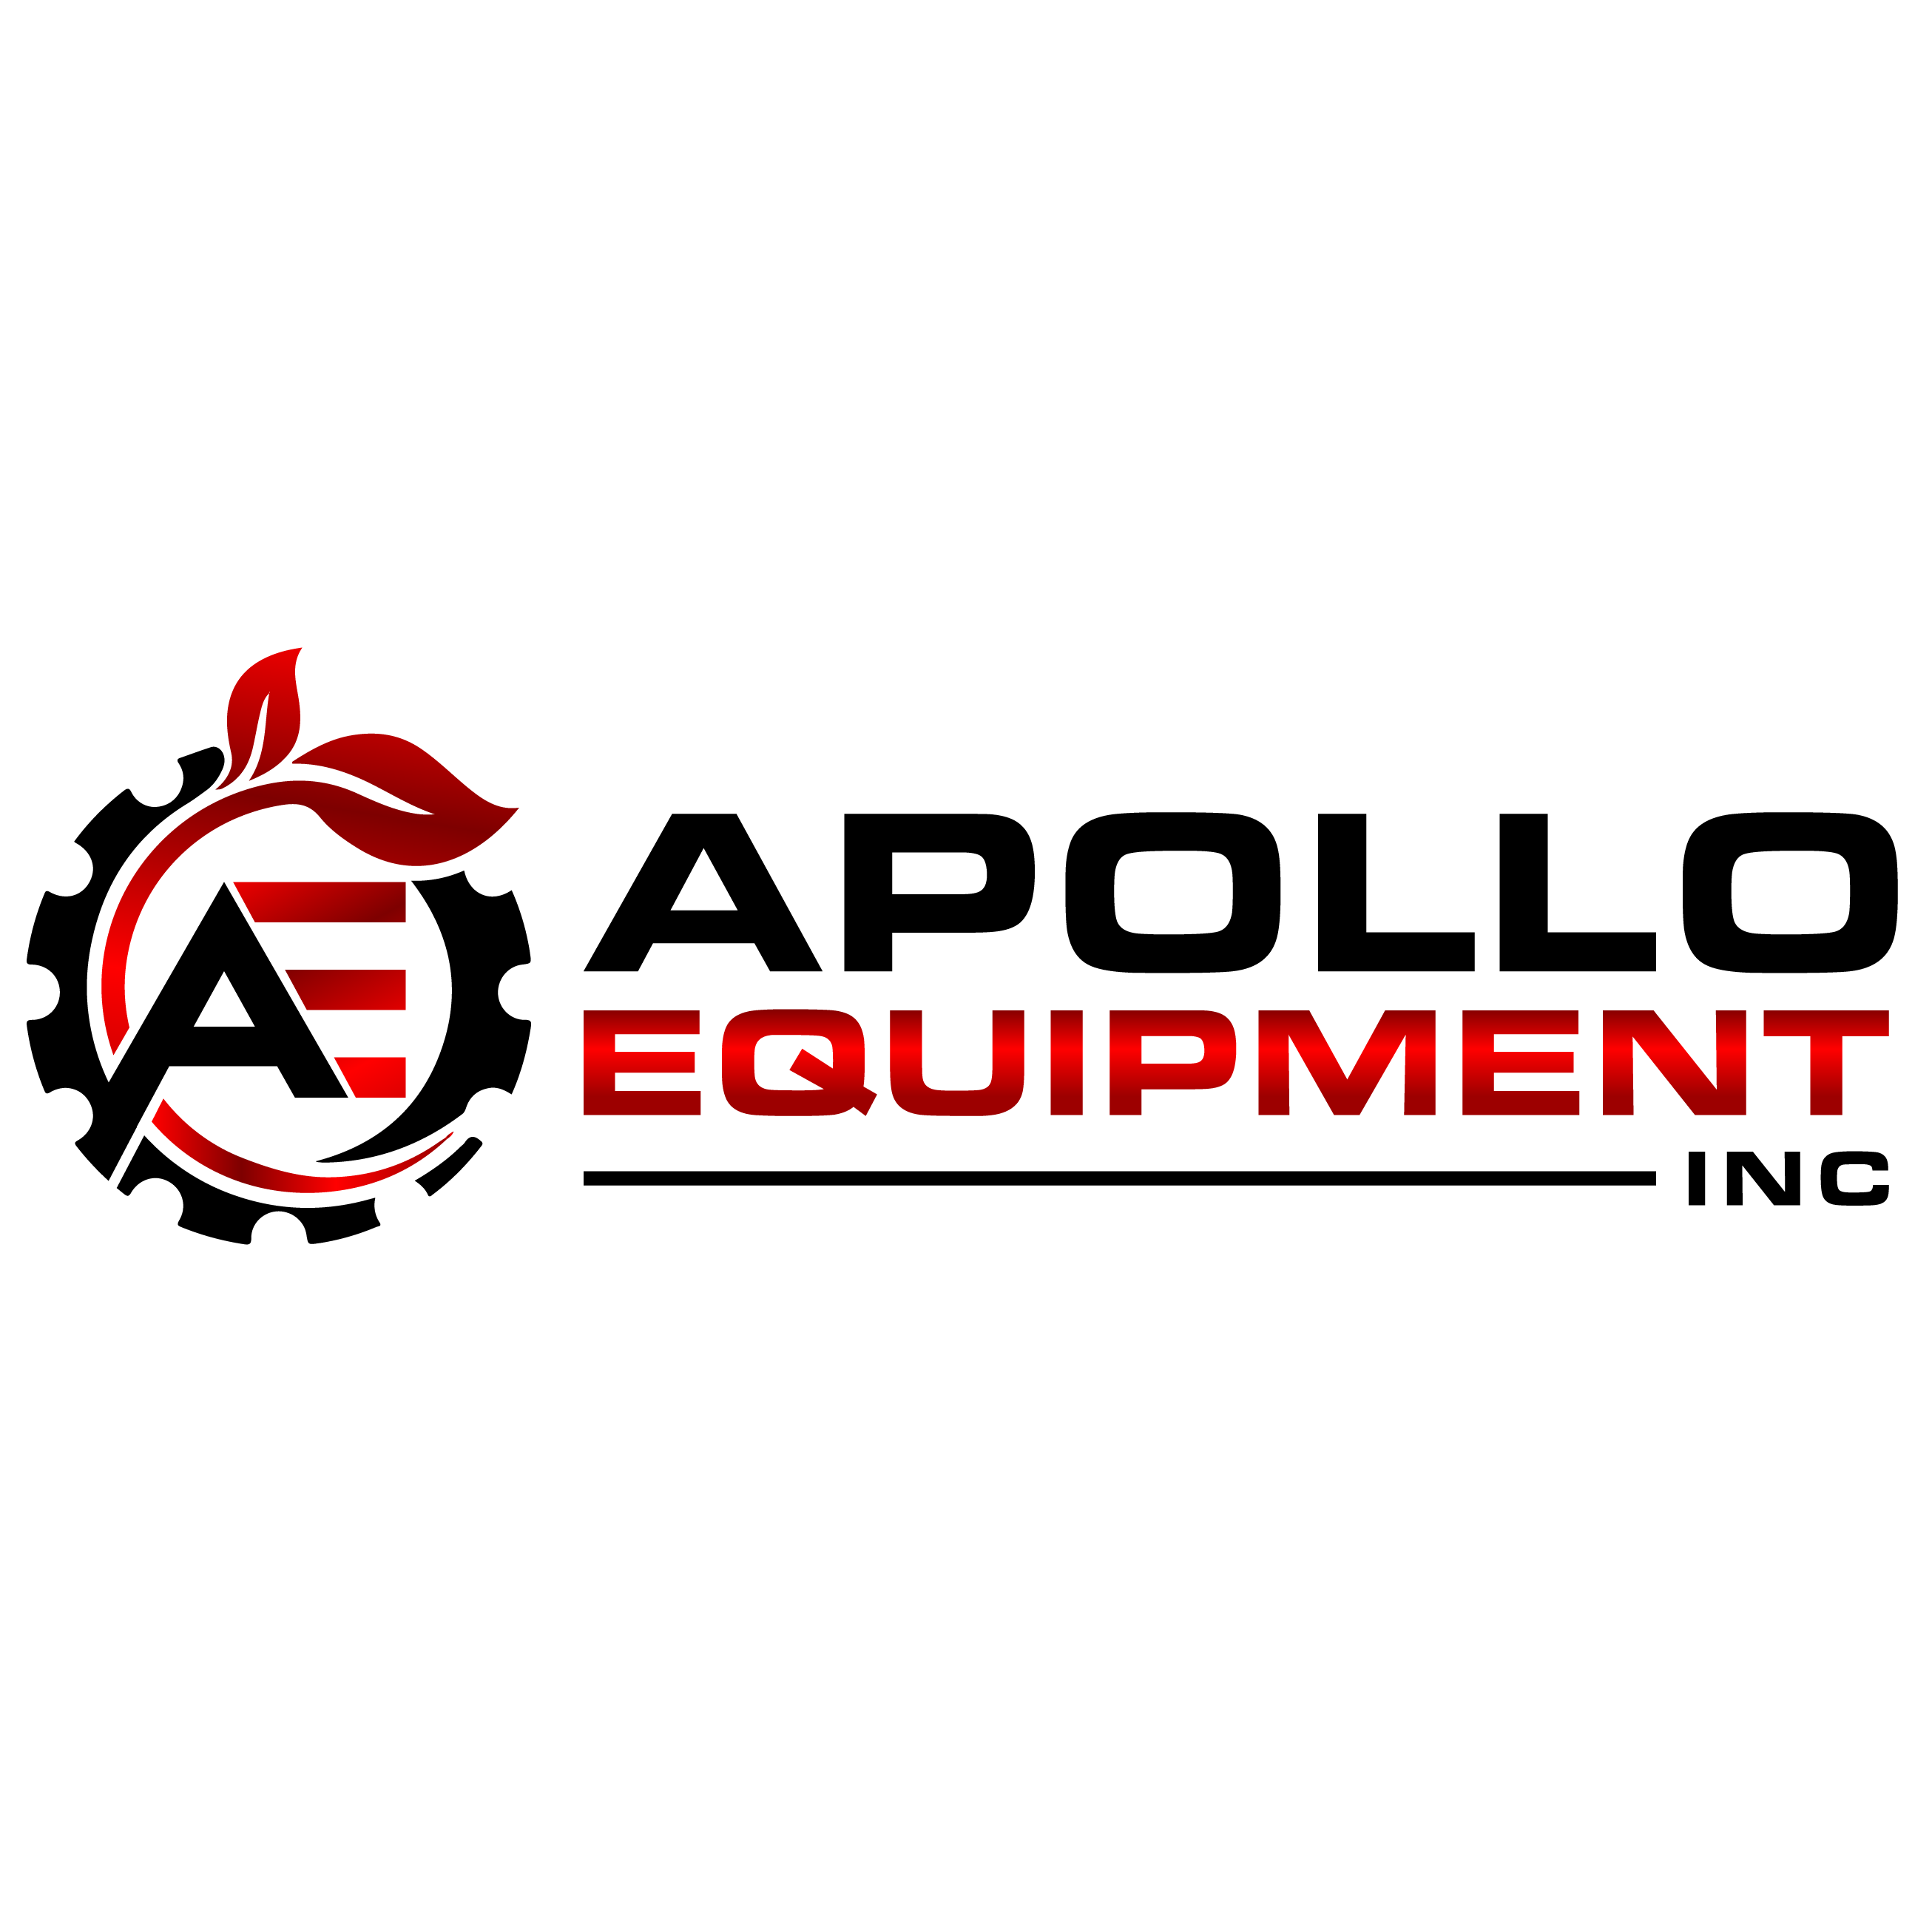 Apollo Equipment - Woodburn, OR 97071 - (503)902-4555 | ShowMeLocal.com